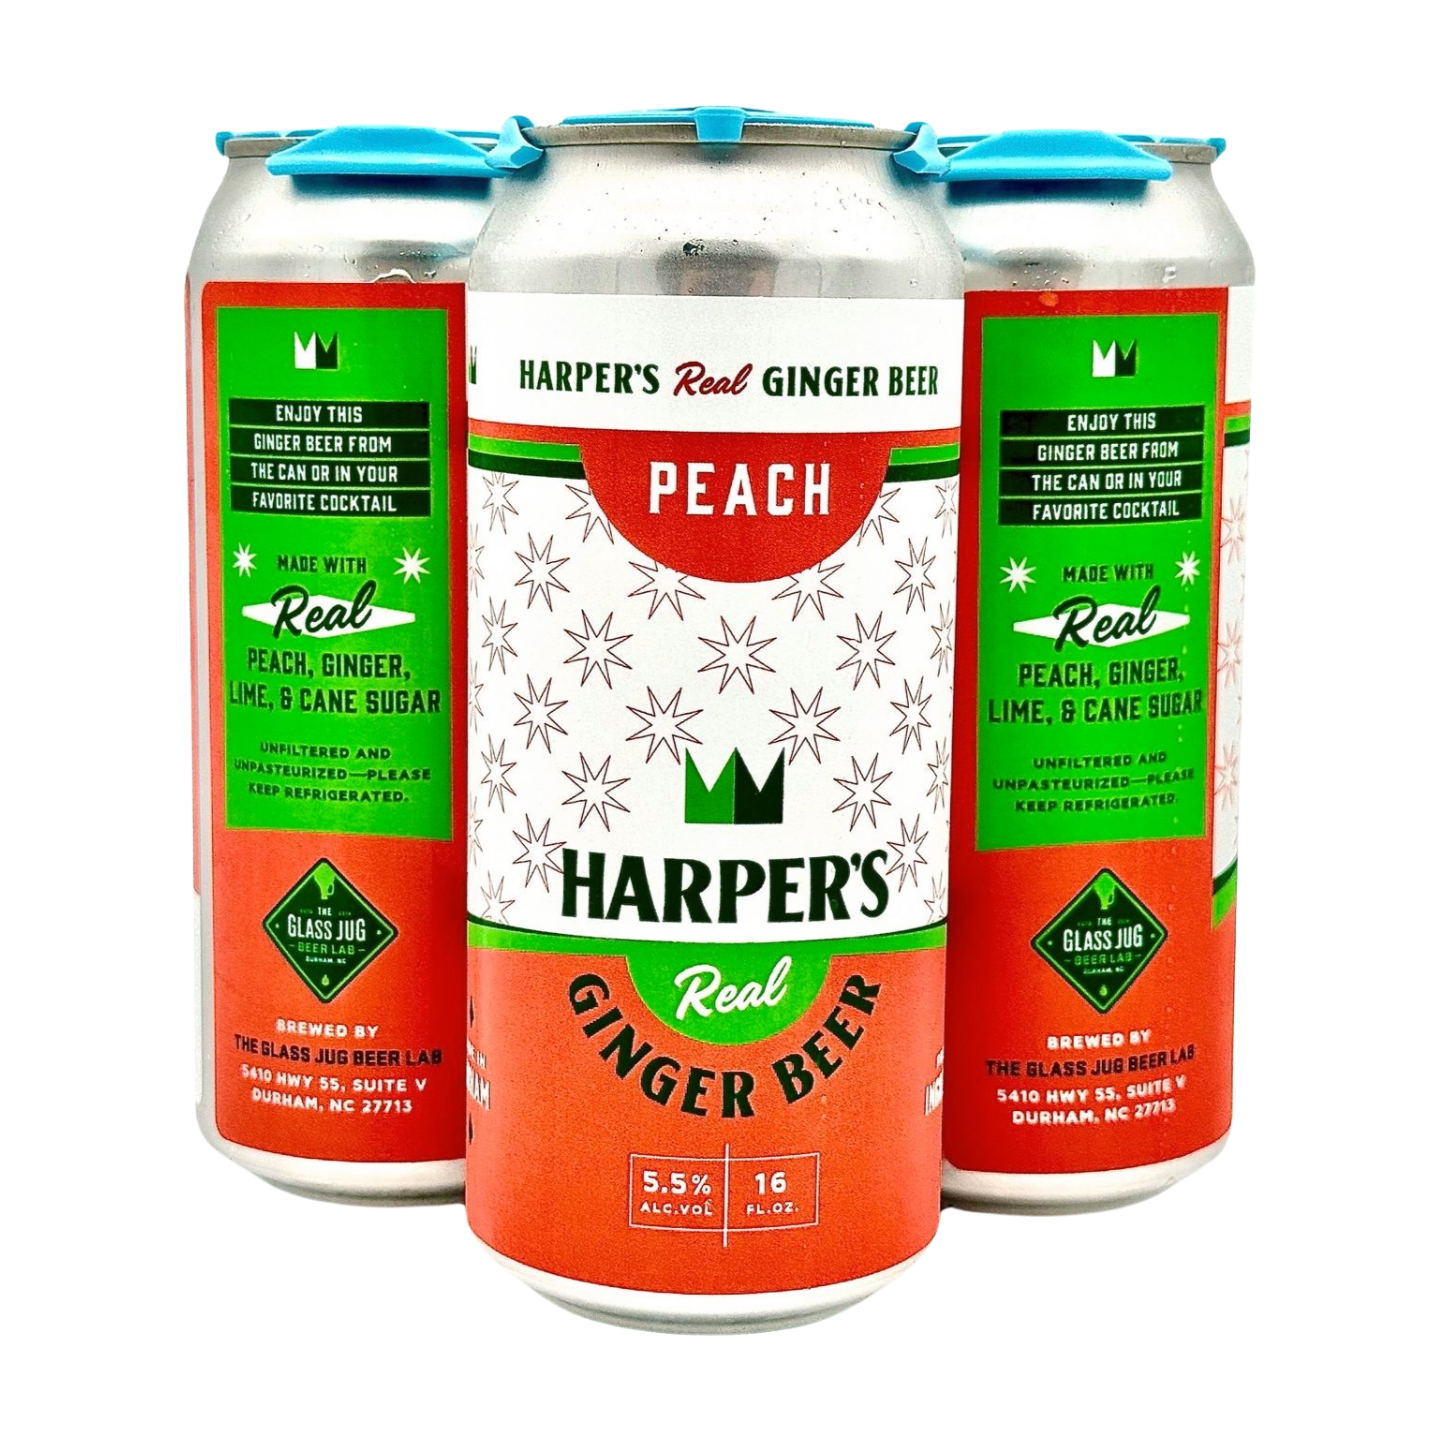 Harper's Peach Ginger Beer, 16 oz cans, 4 pack